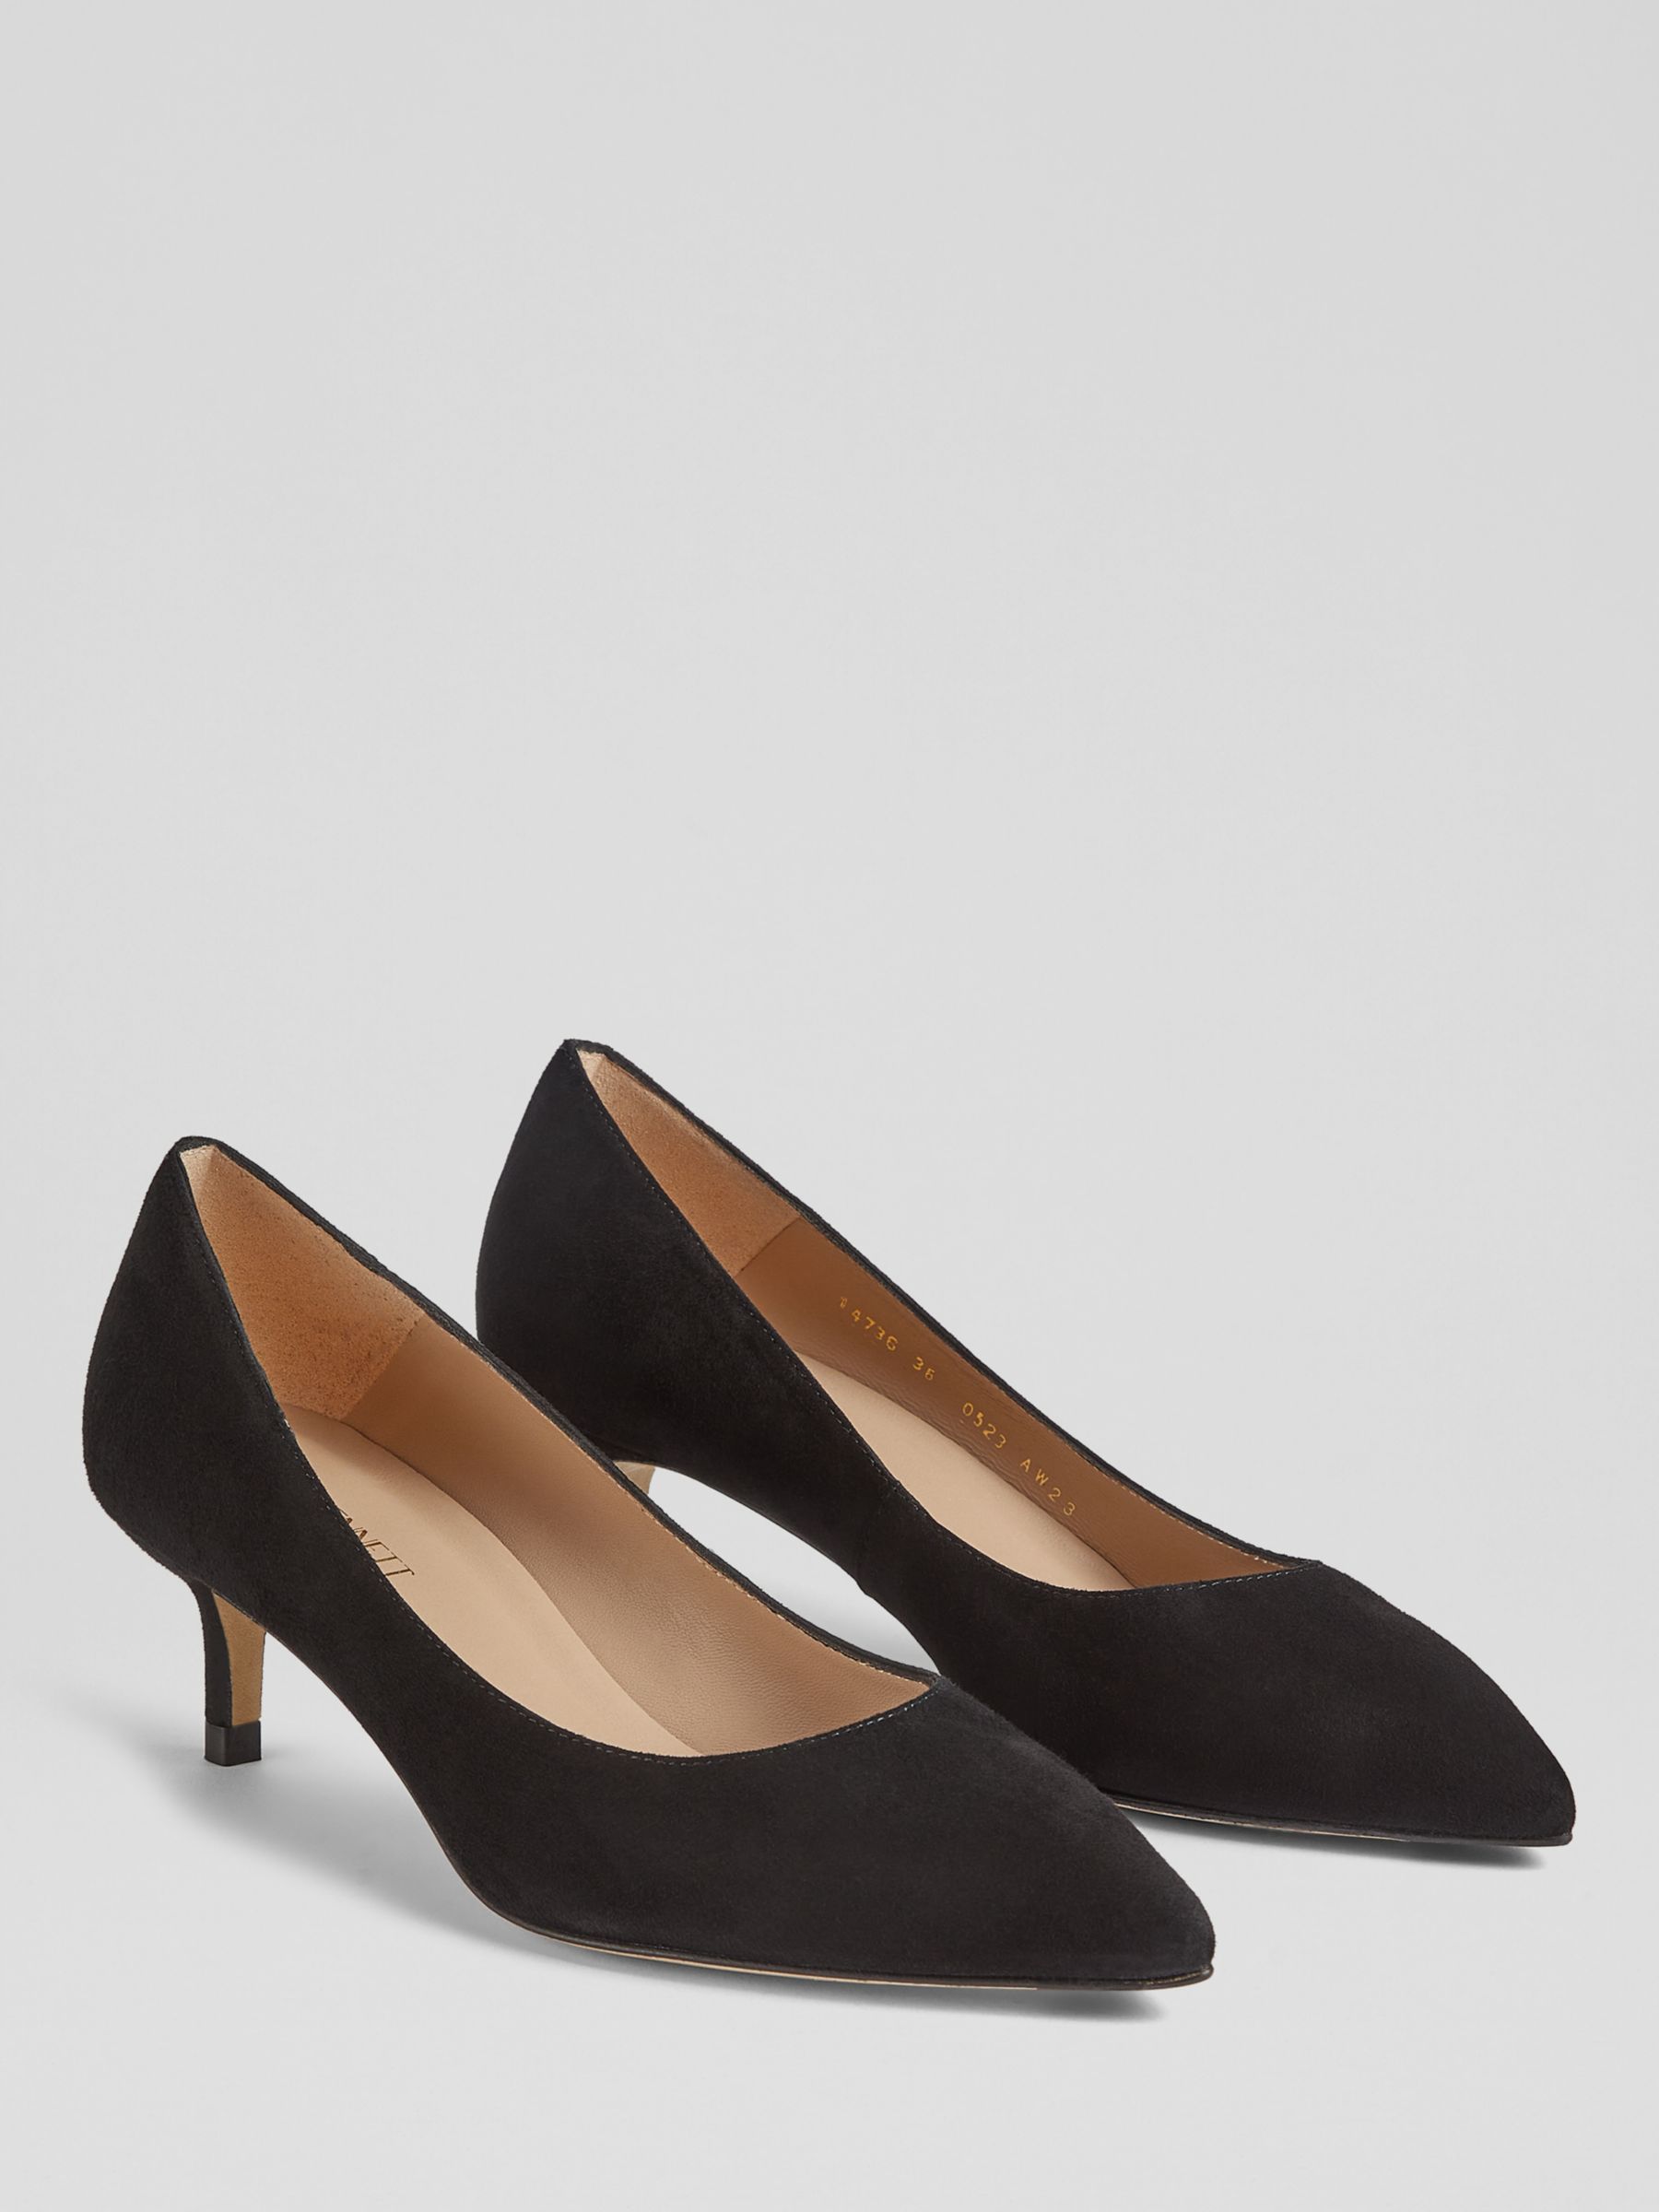 L.K.Bennett Audrey Pointed Toe Court Shoes, Black Suede, 2